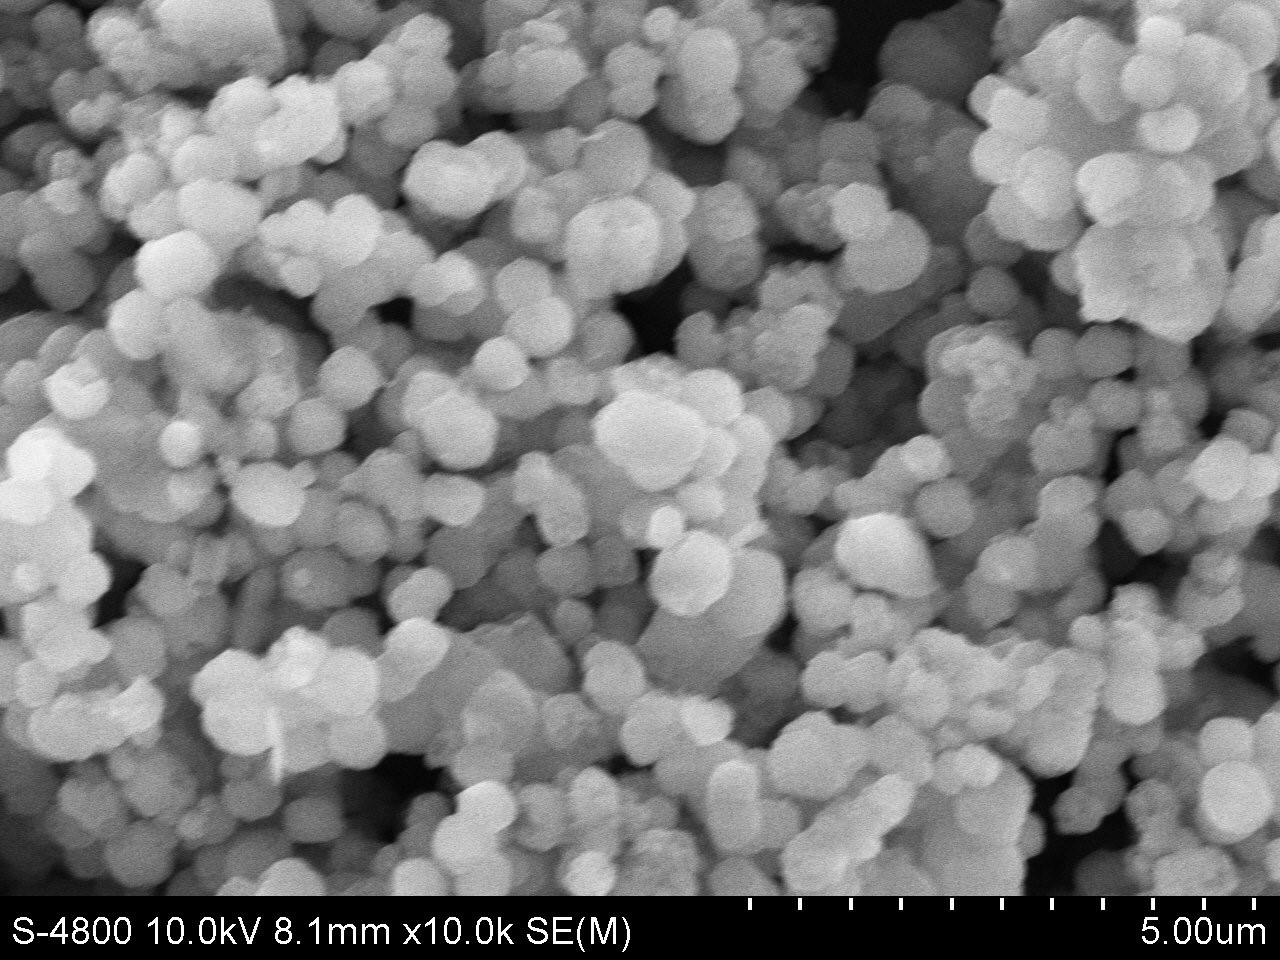 EU Commission classifies titanium dioxide in powder form